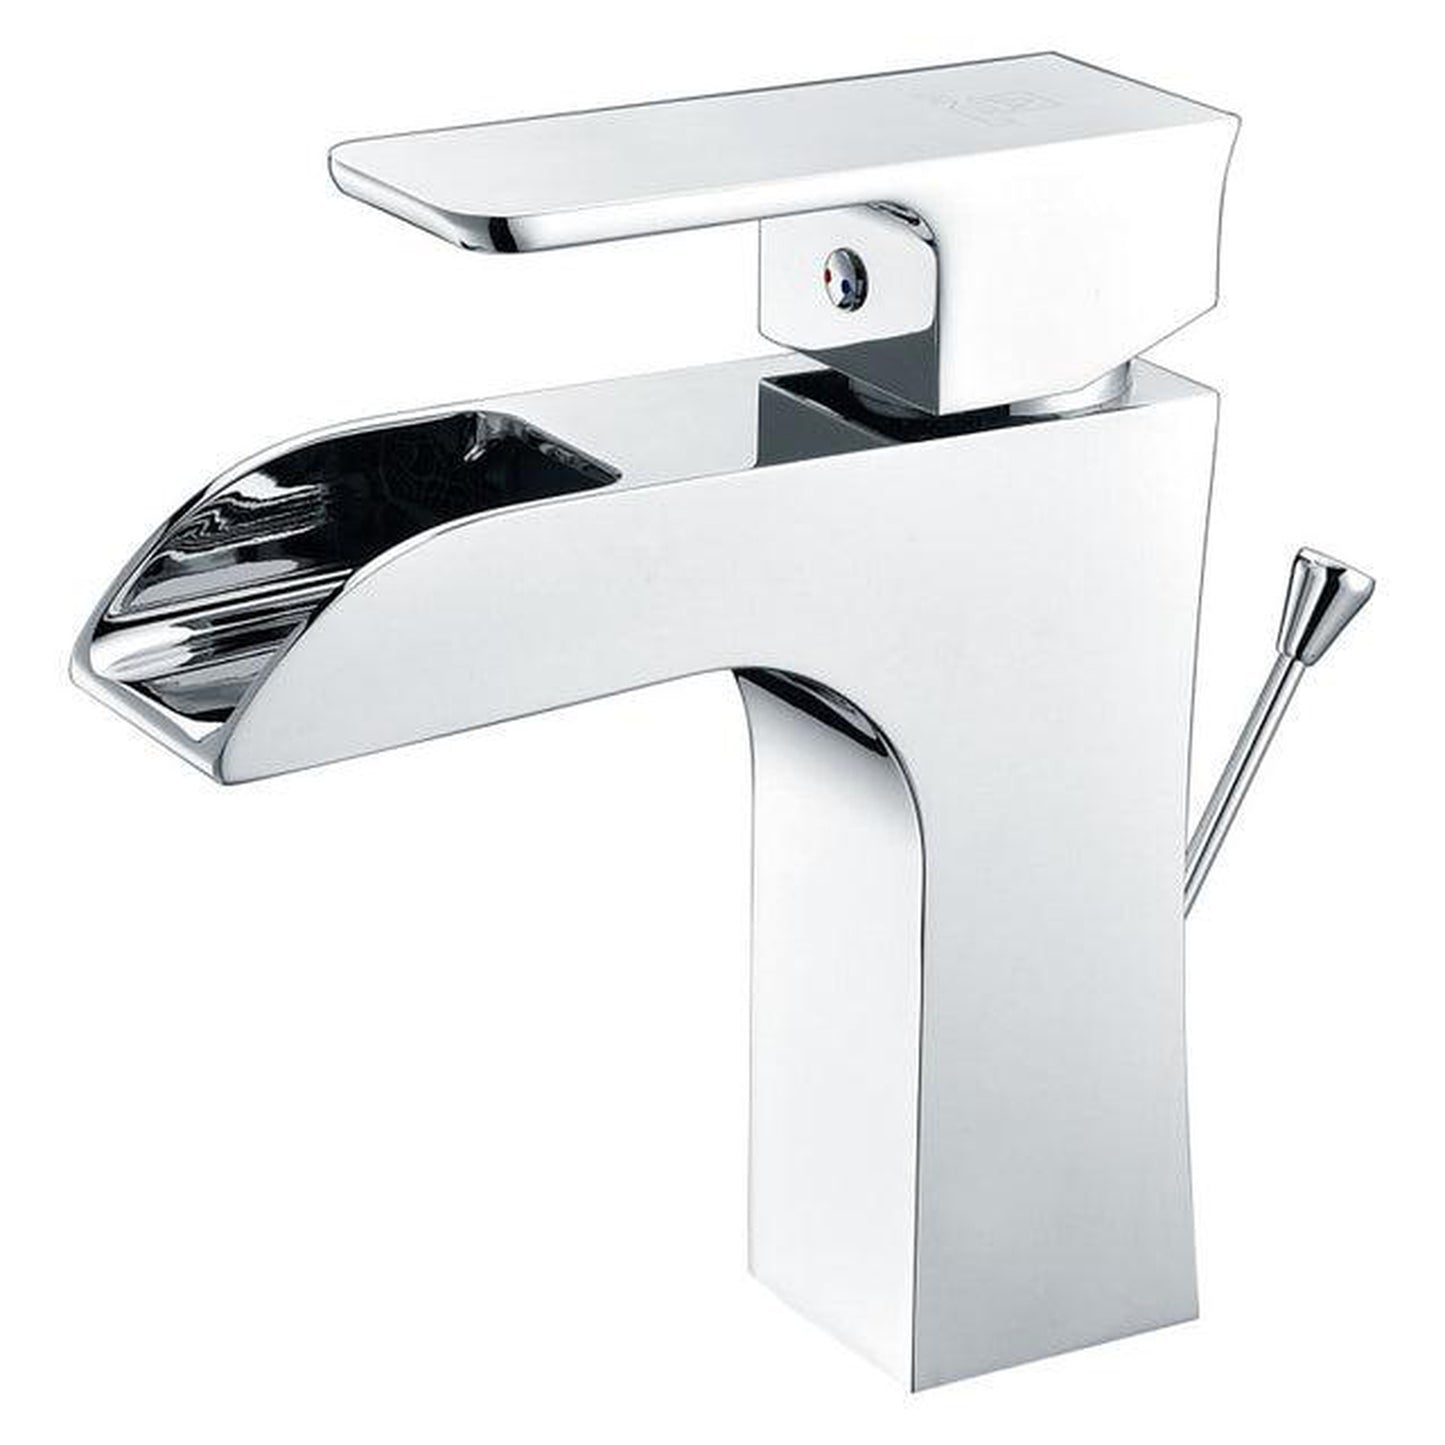 ANZZI Forza Series 4" Single Hole Polished Chrome Low-Arc Bathroom Sink Faucet